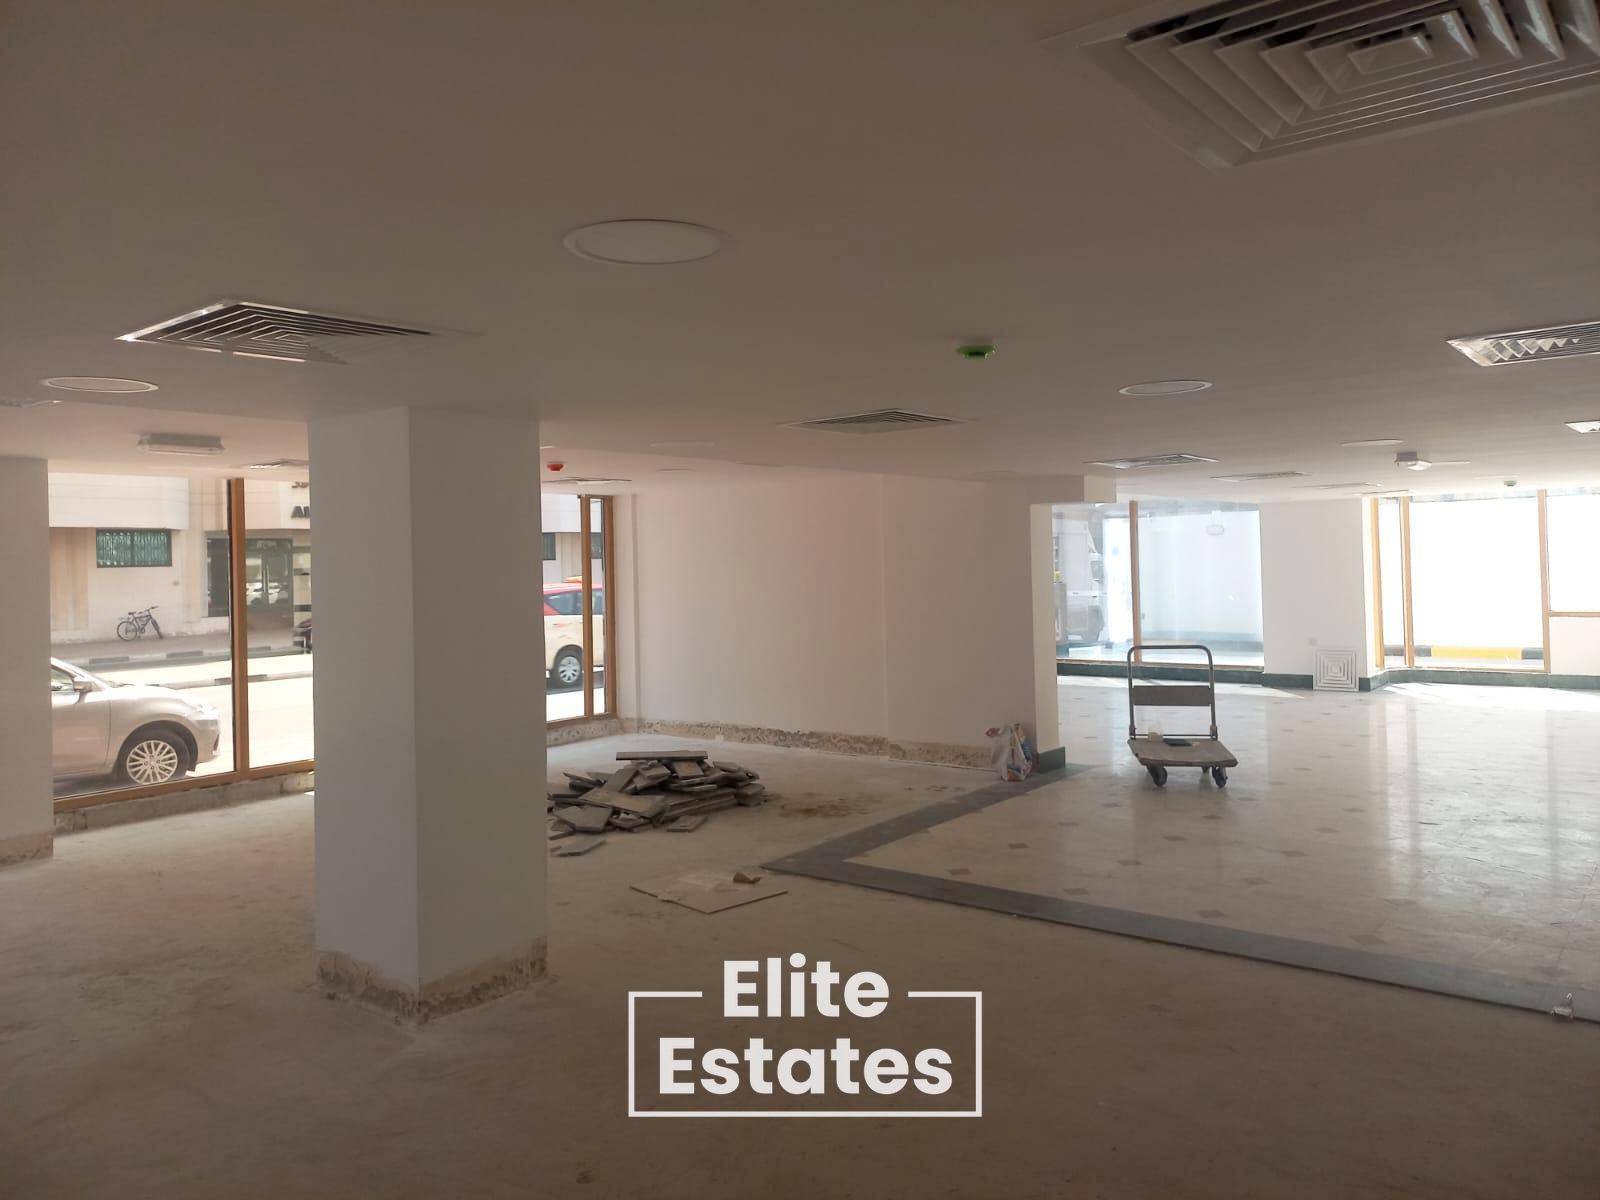 Real Estate_Commercial Property for Rent_Bur Dubai